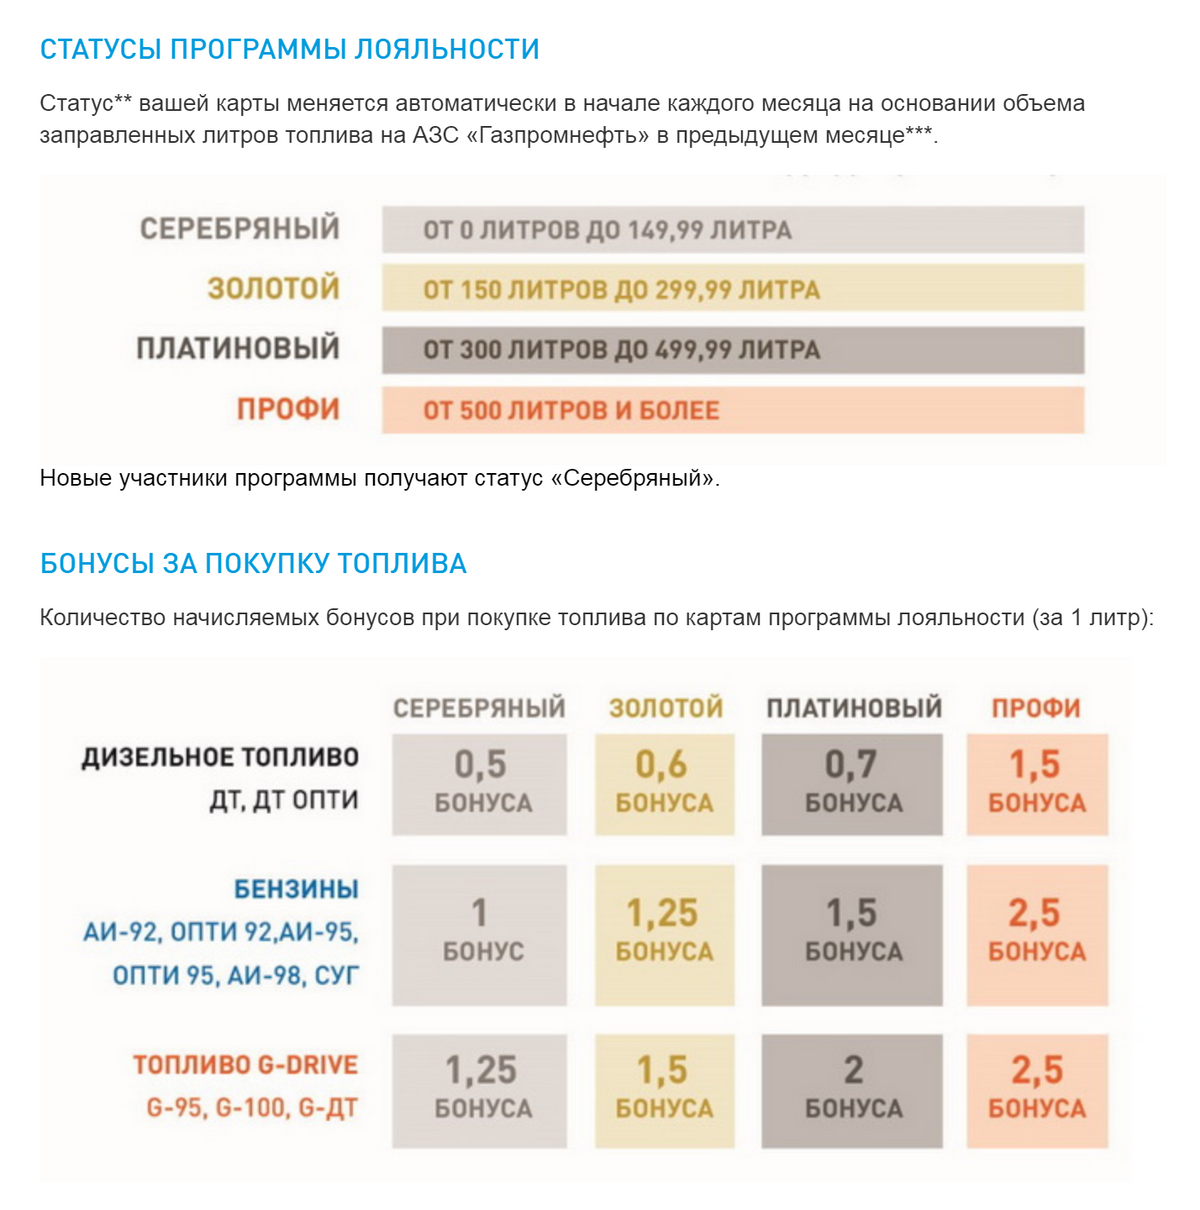 Программа лояльности «Газпромнефти» в&nbsp;2020&nbsp;году